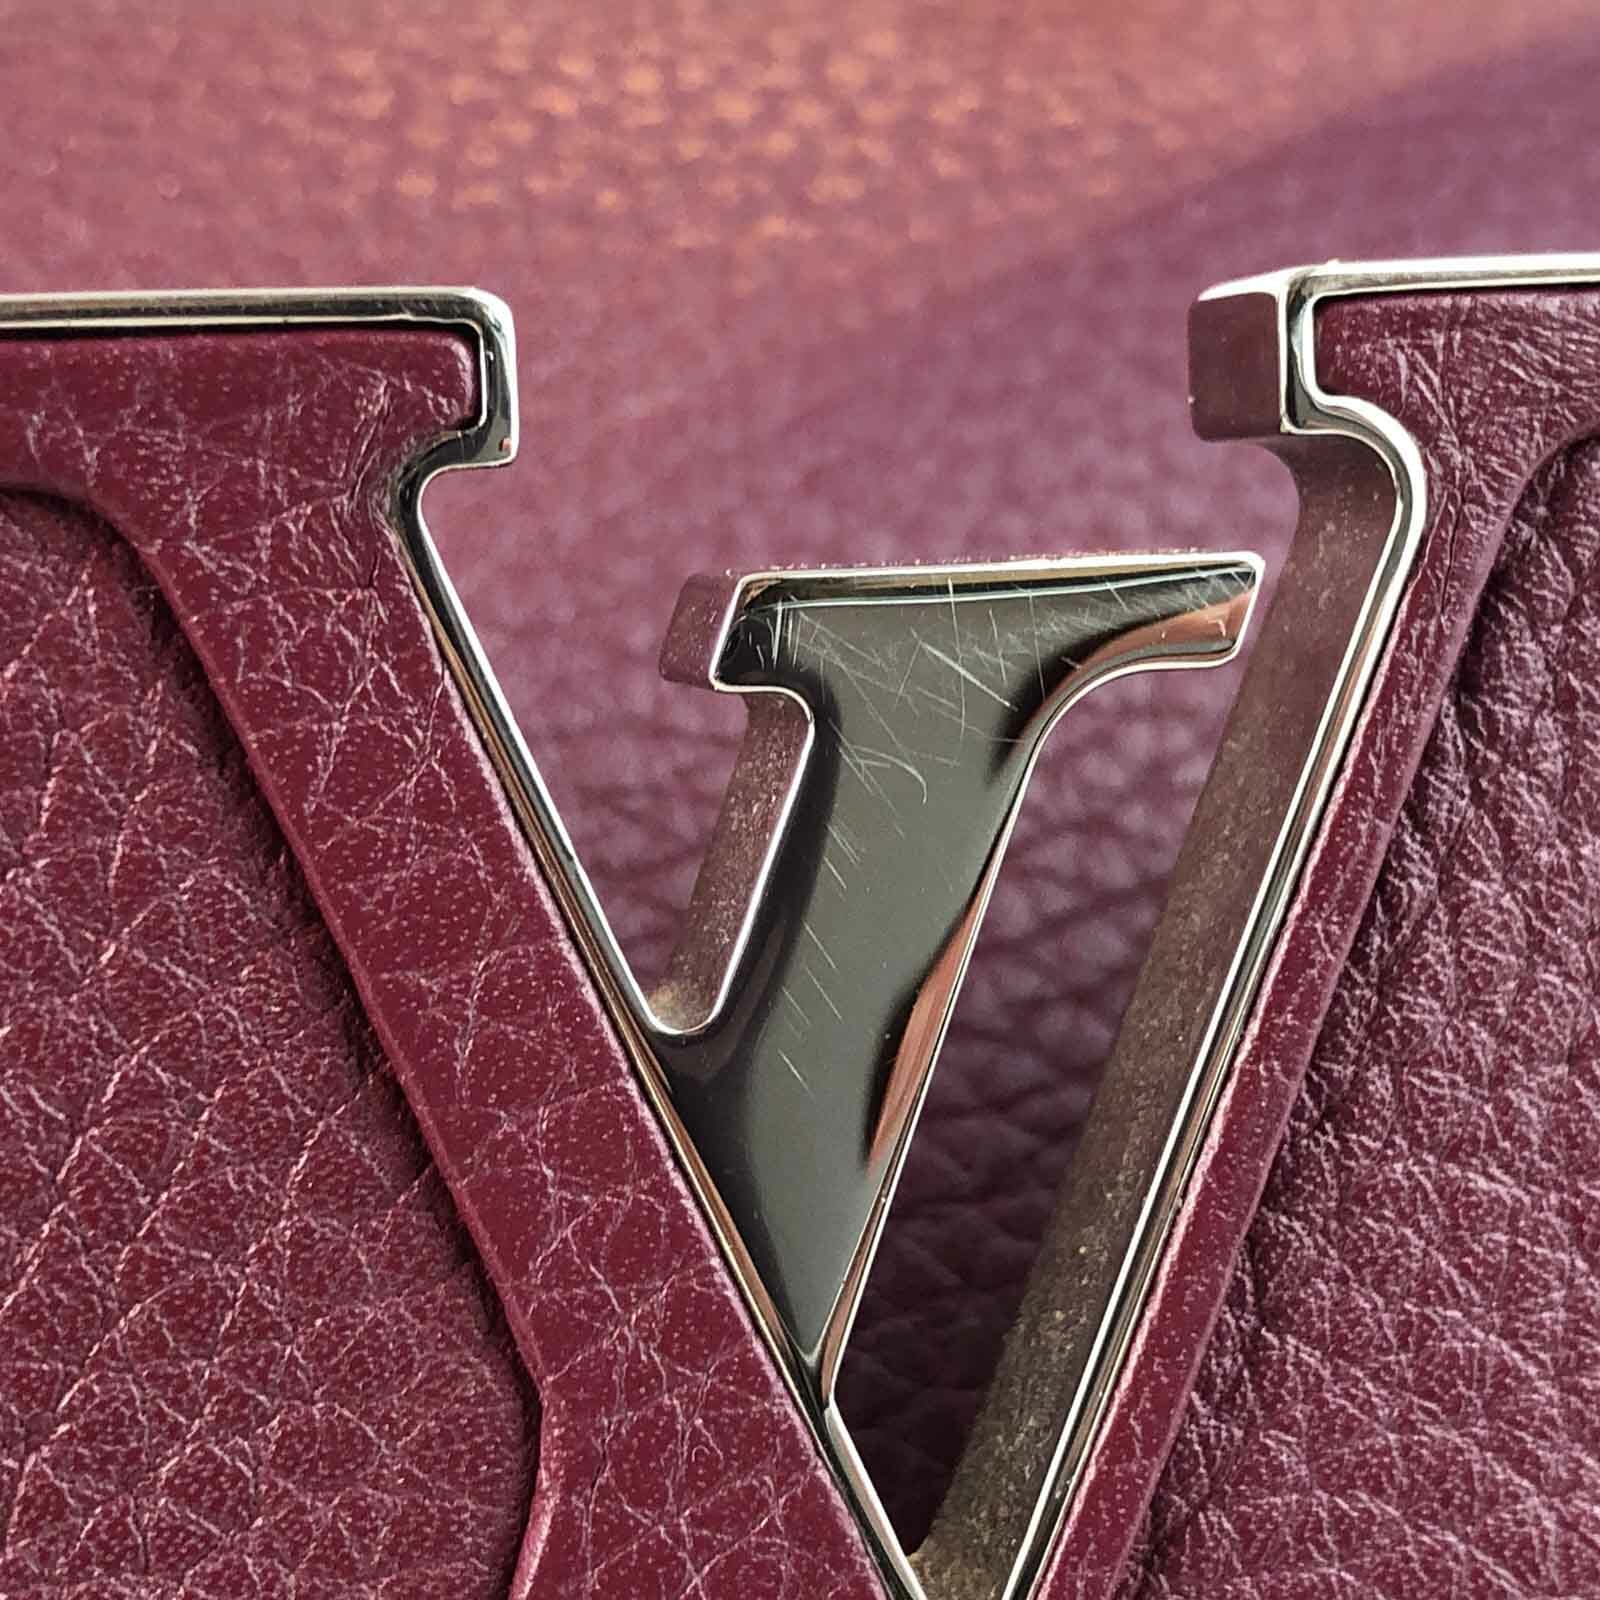 Louis Vuitton Capucines Size Comparison of Mini, BB, PM, MM, and GM -  Handbagholic